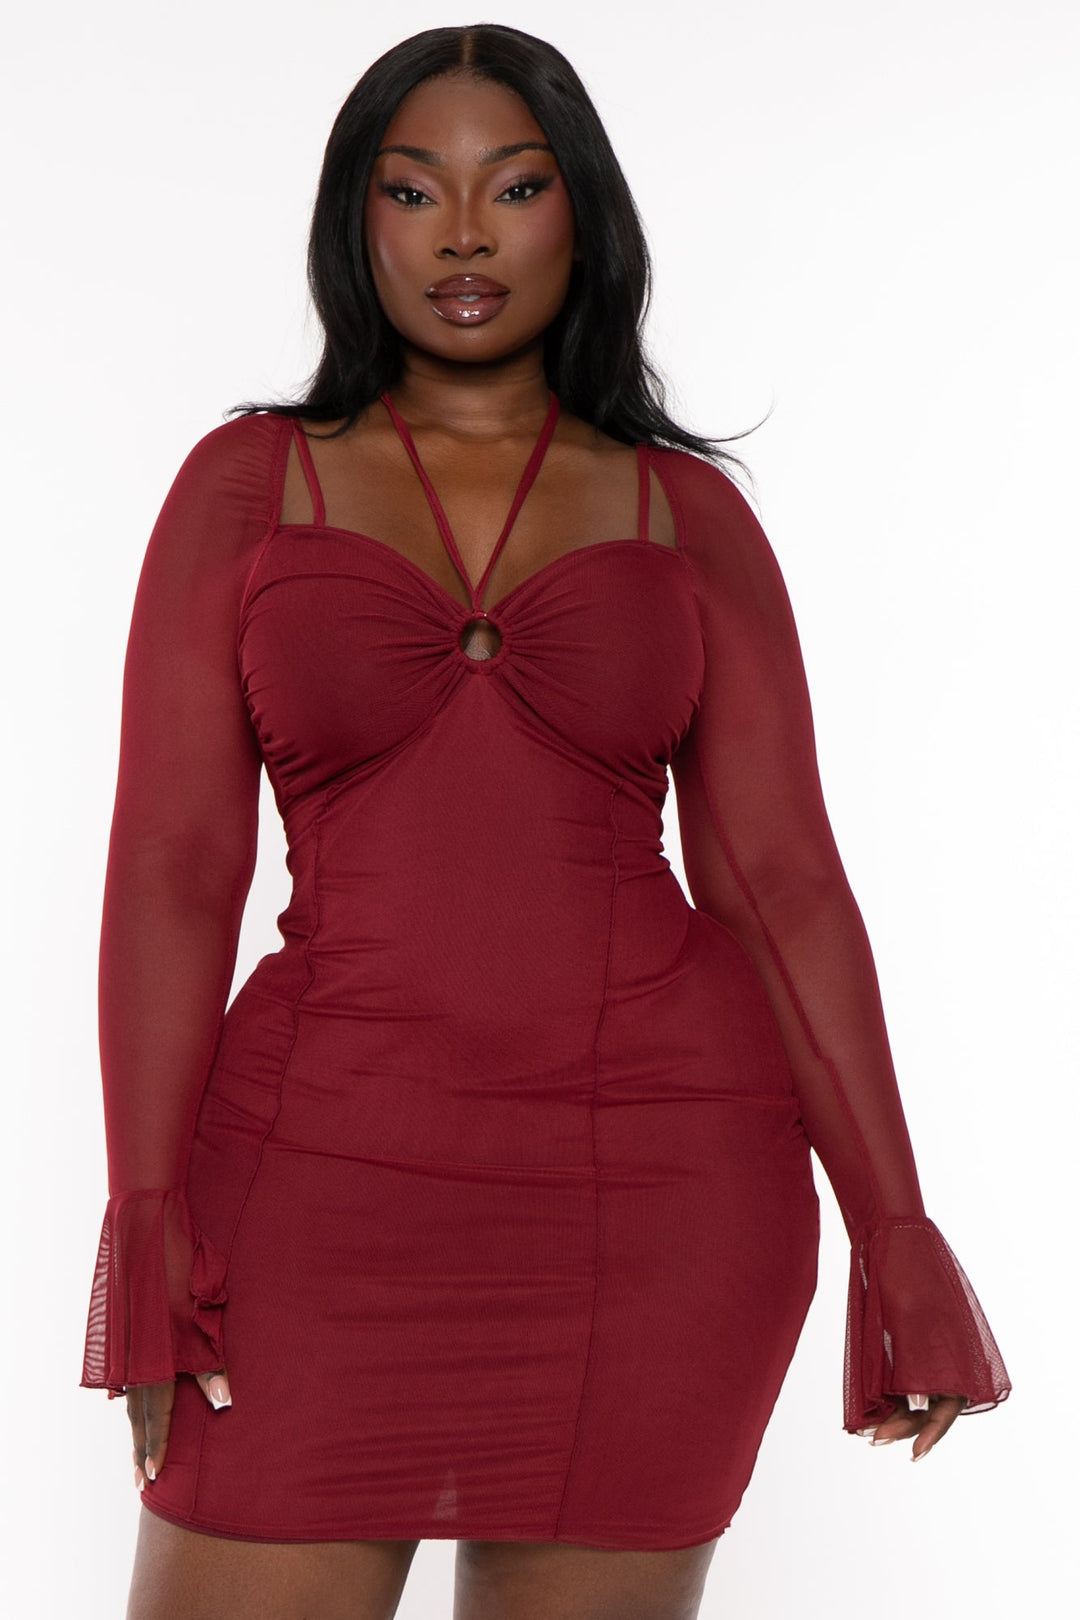 Curvy Sense Dresses Plus Size Helena Mesh Bodycon Dress- Burgundy